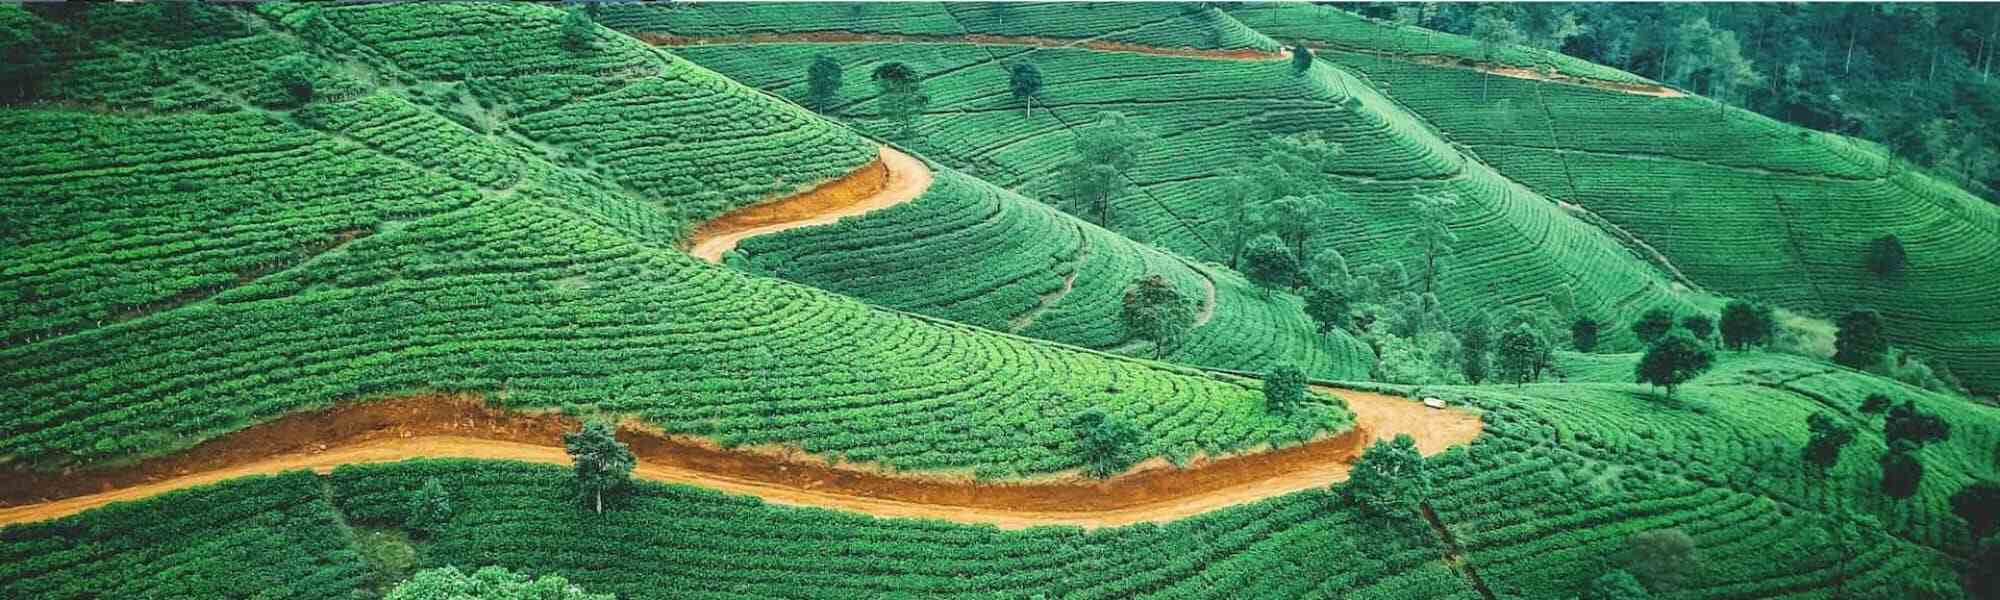 Nuwara Eliya tea fields